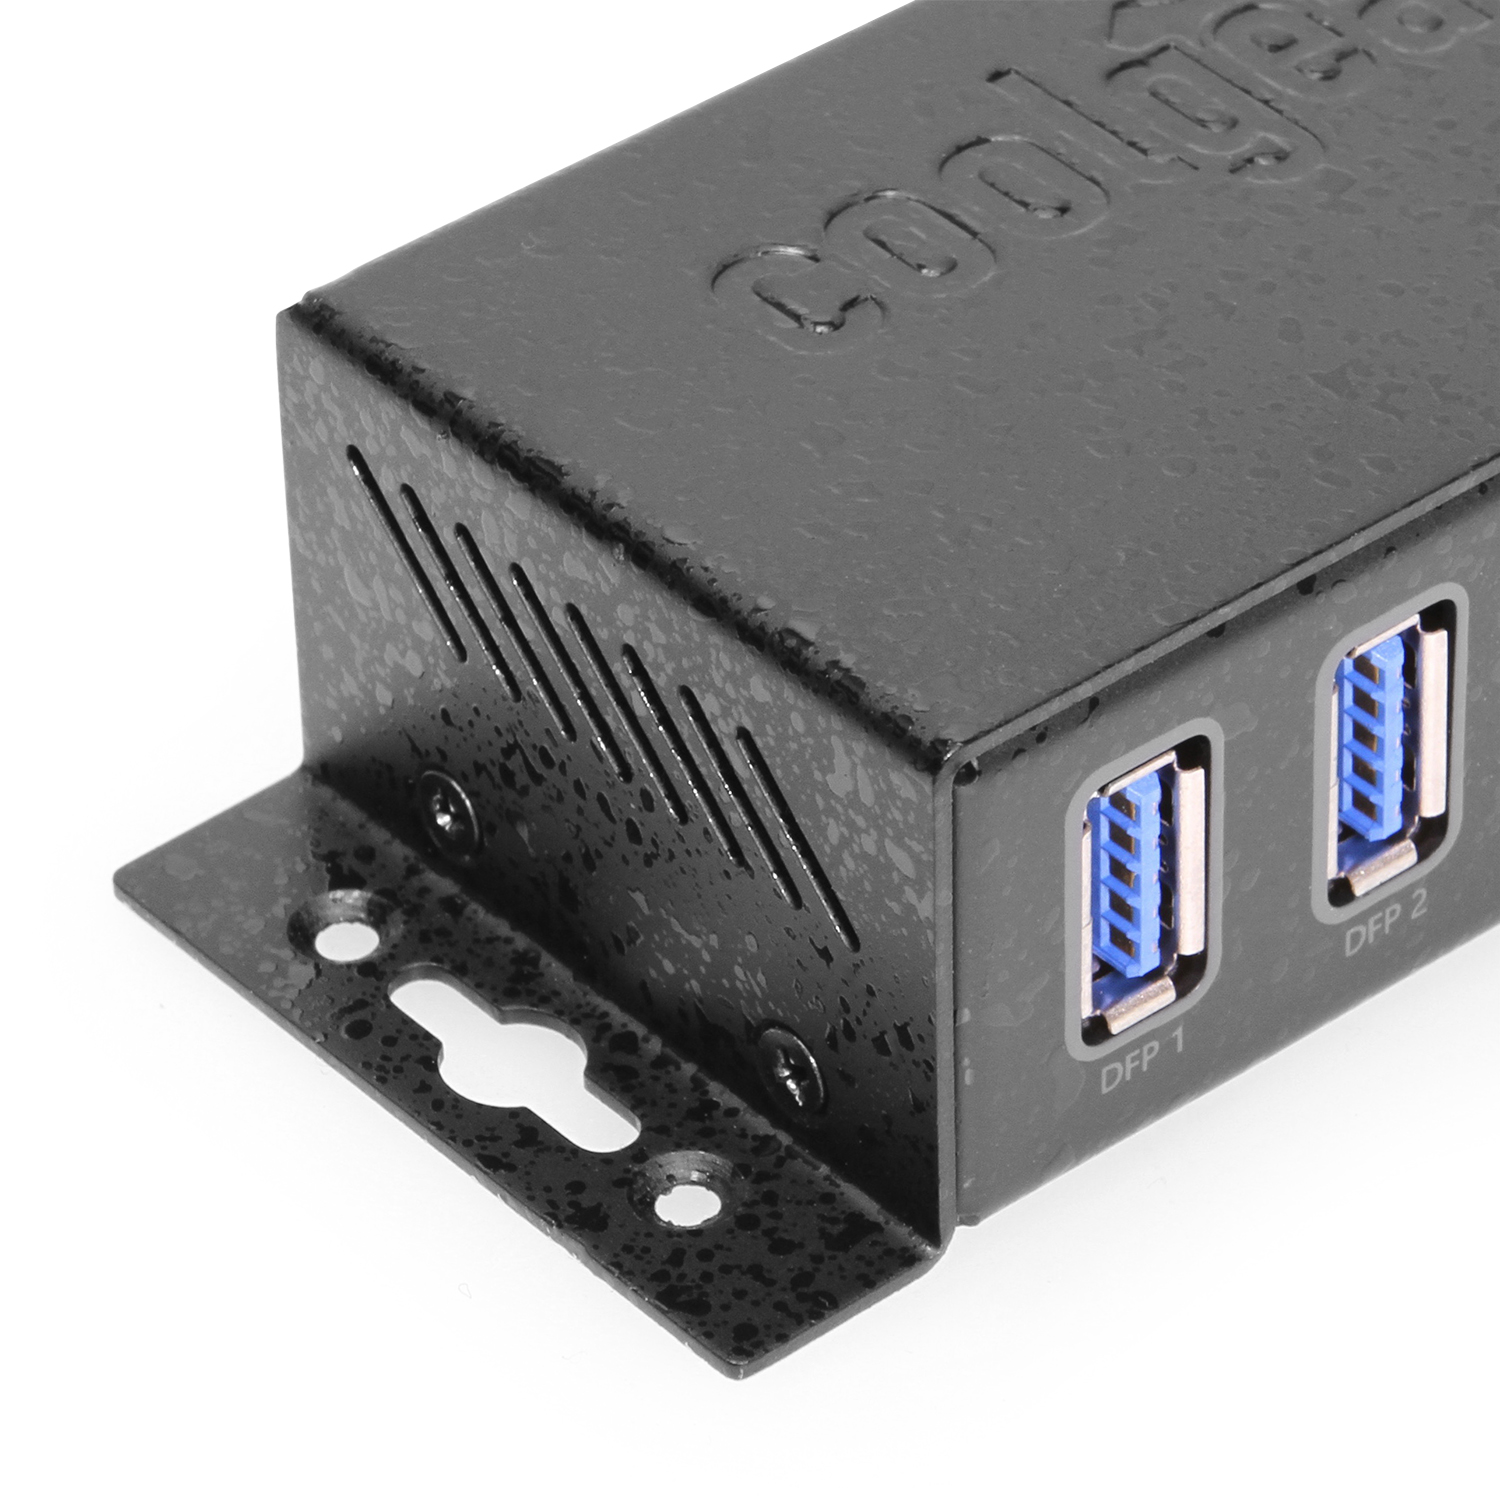 3.0 USB Hub 30cm - 4 Ports (Model - 303) – Cowboy World